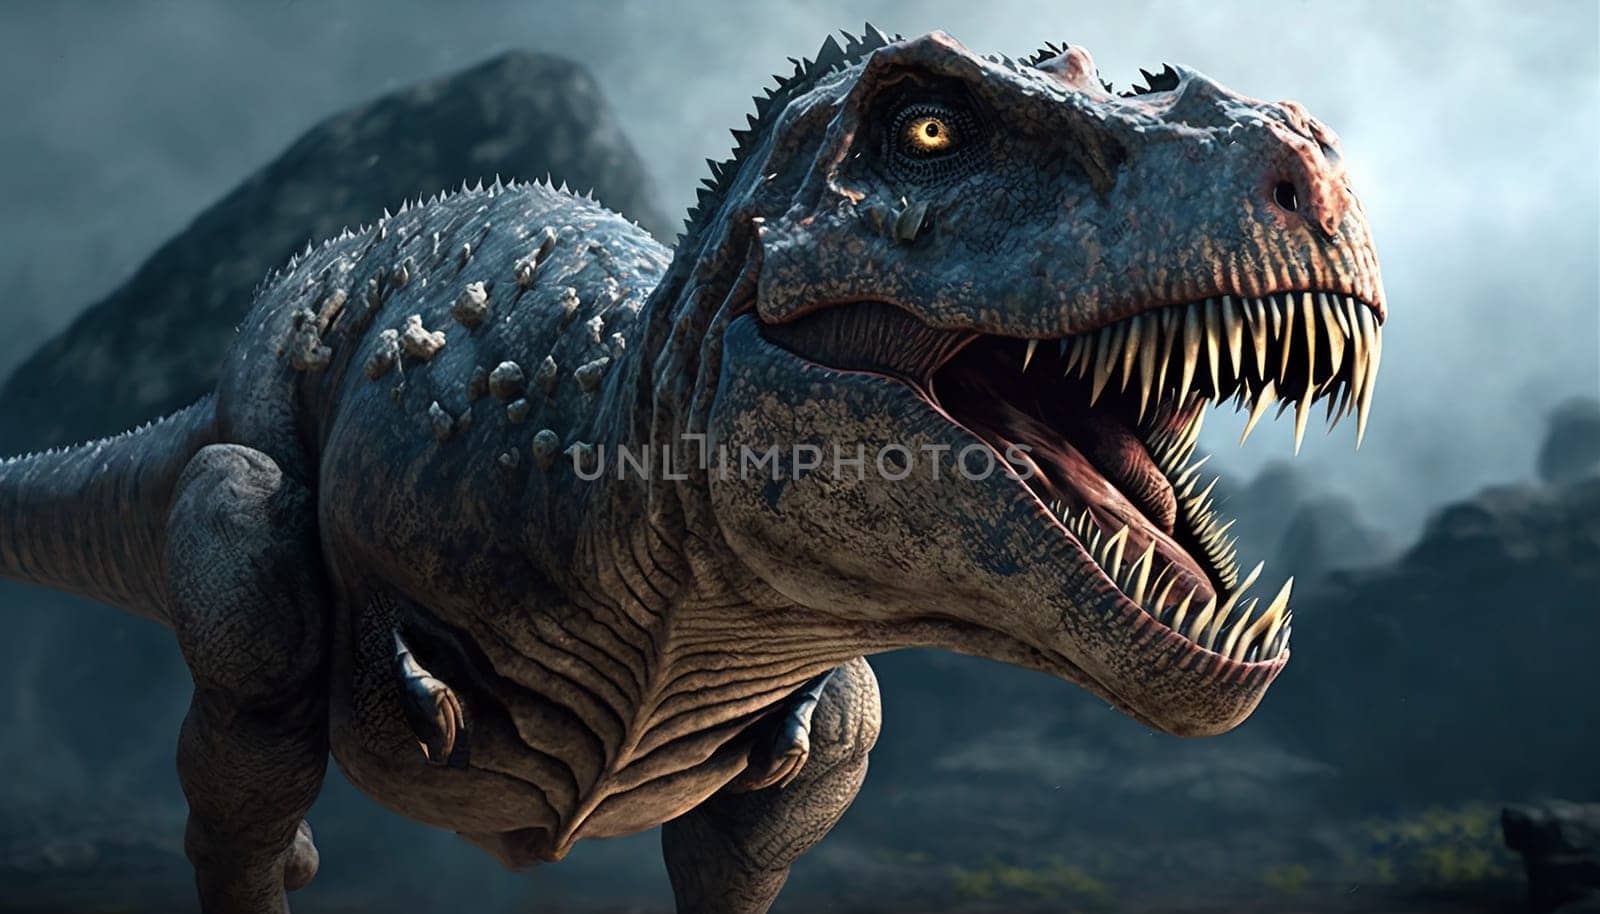 The head of dinosaur in the dark background by milastokerpro